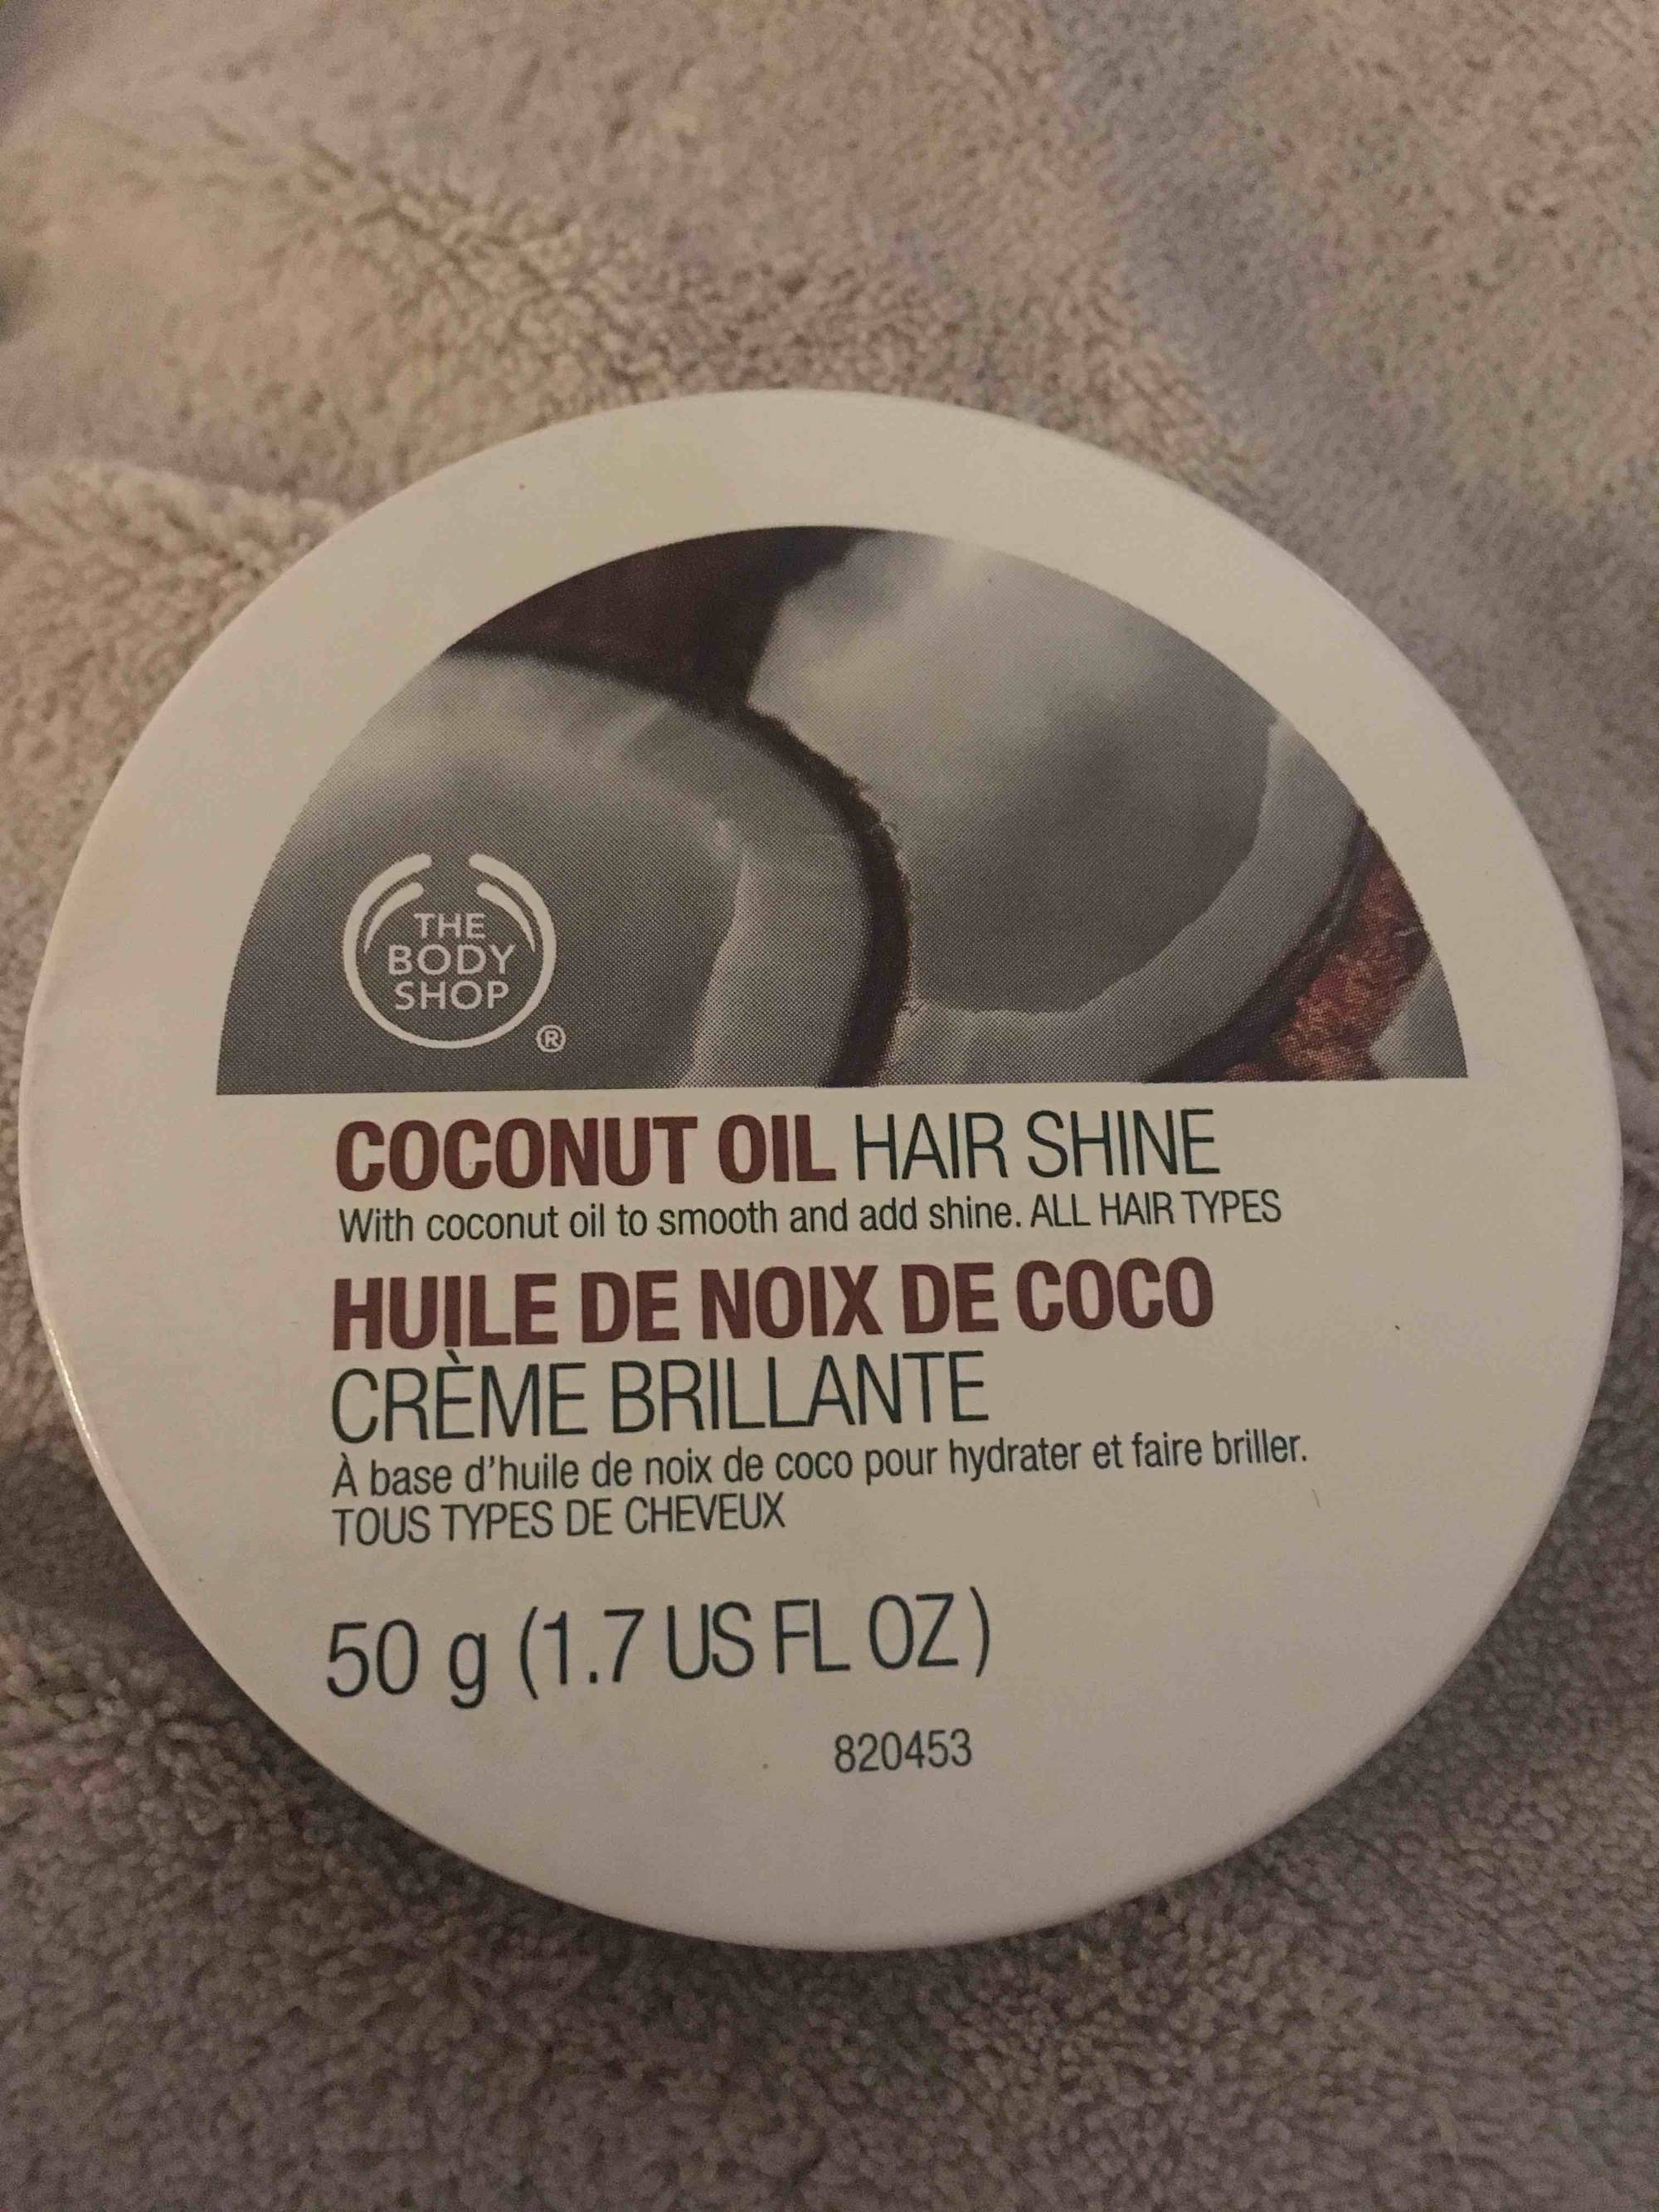 THE BODY SHOP - Huile de noix de coco - Crème brillante